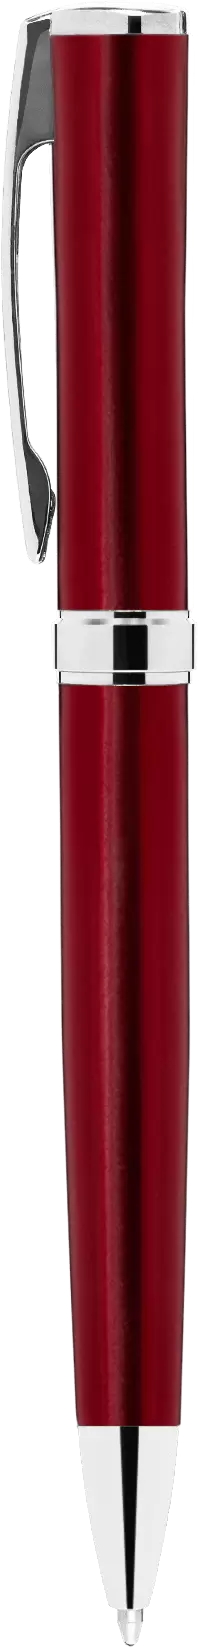 Ручка COSMO MIRROR Красная матовая 3070.33